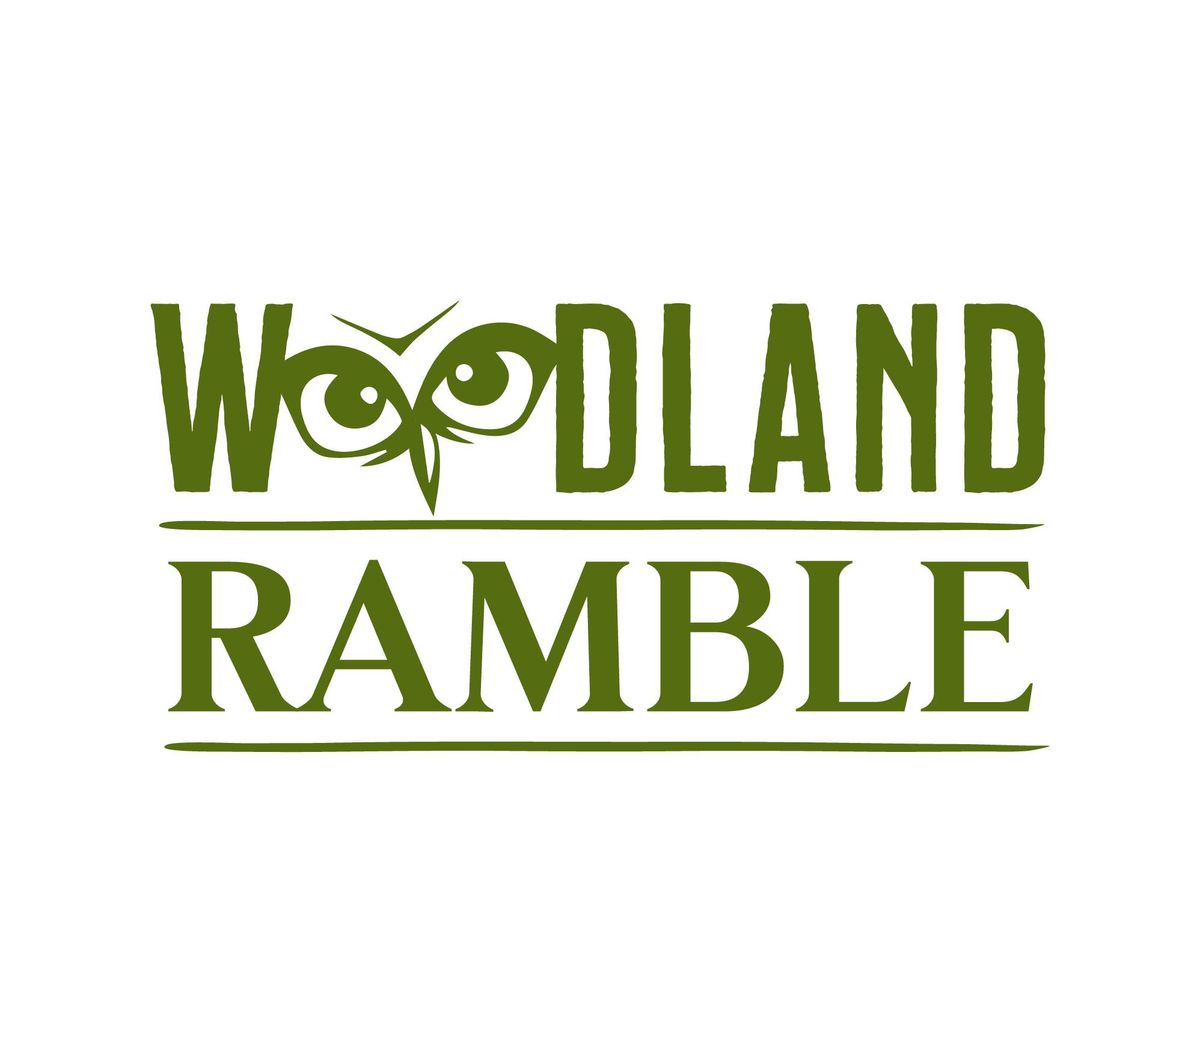 Mr. Bill's Woodland Ramble